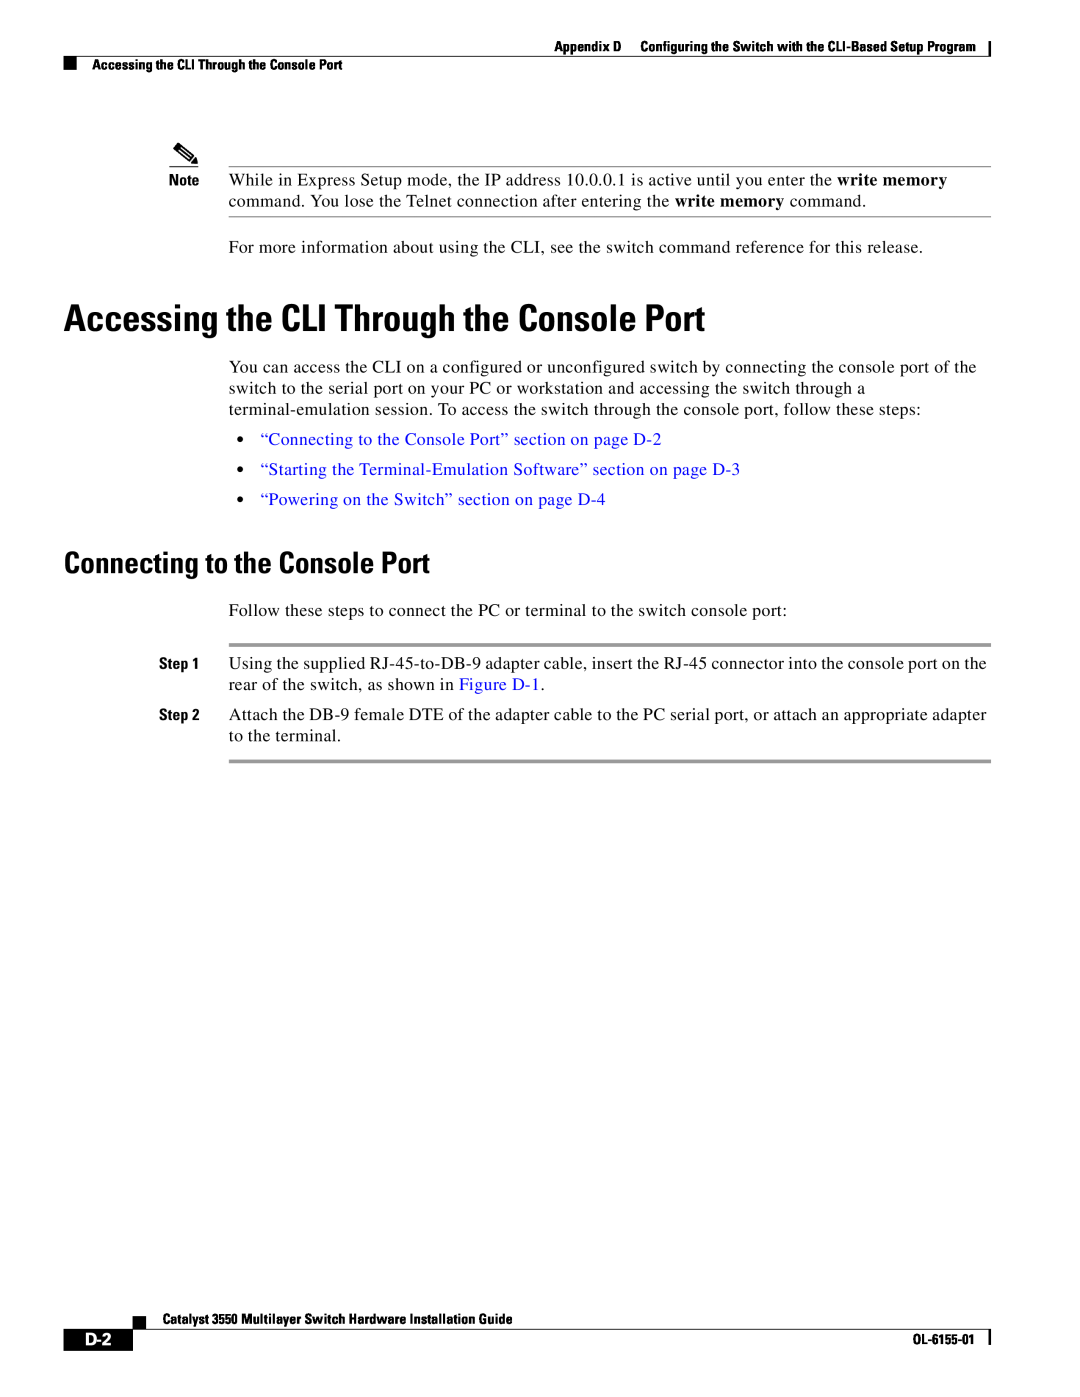 Cisco Systems 3550 manual Accessing the CLI Through the Console Port, Connecting to the Console Port 